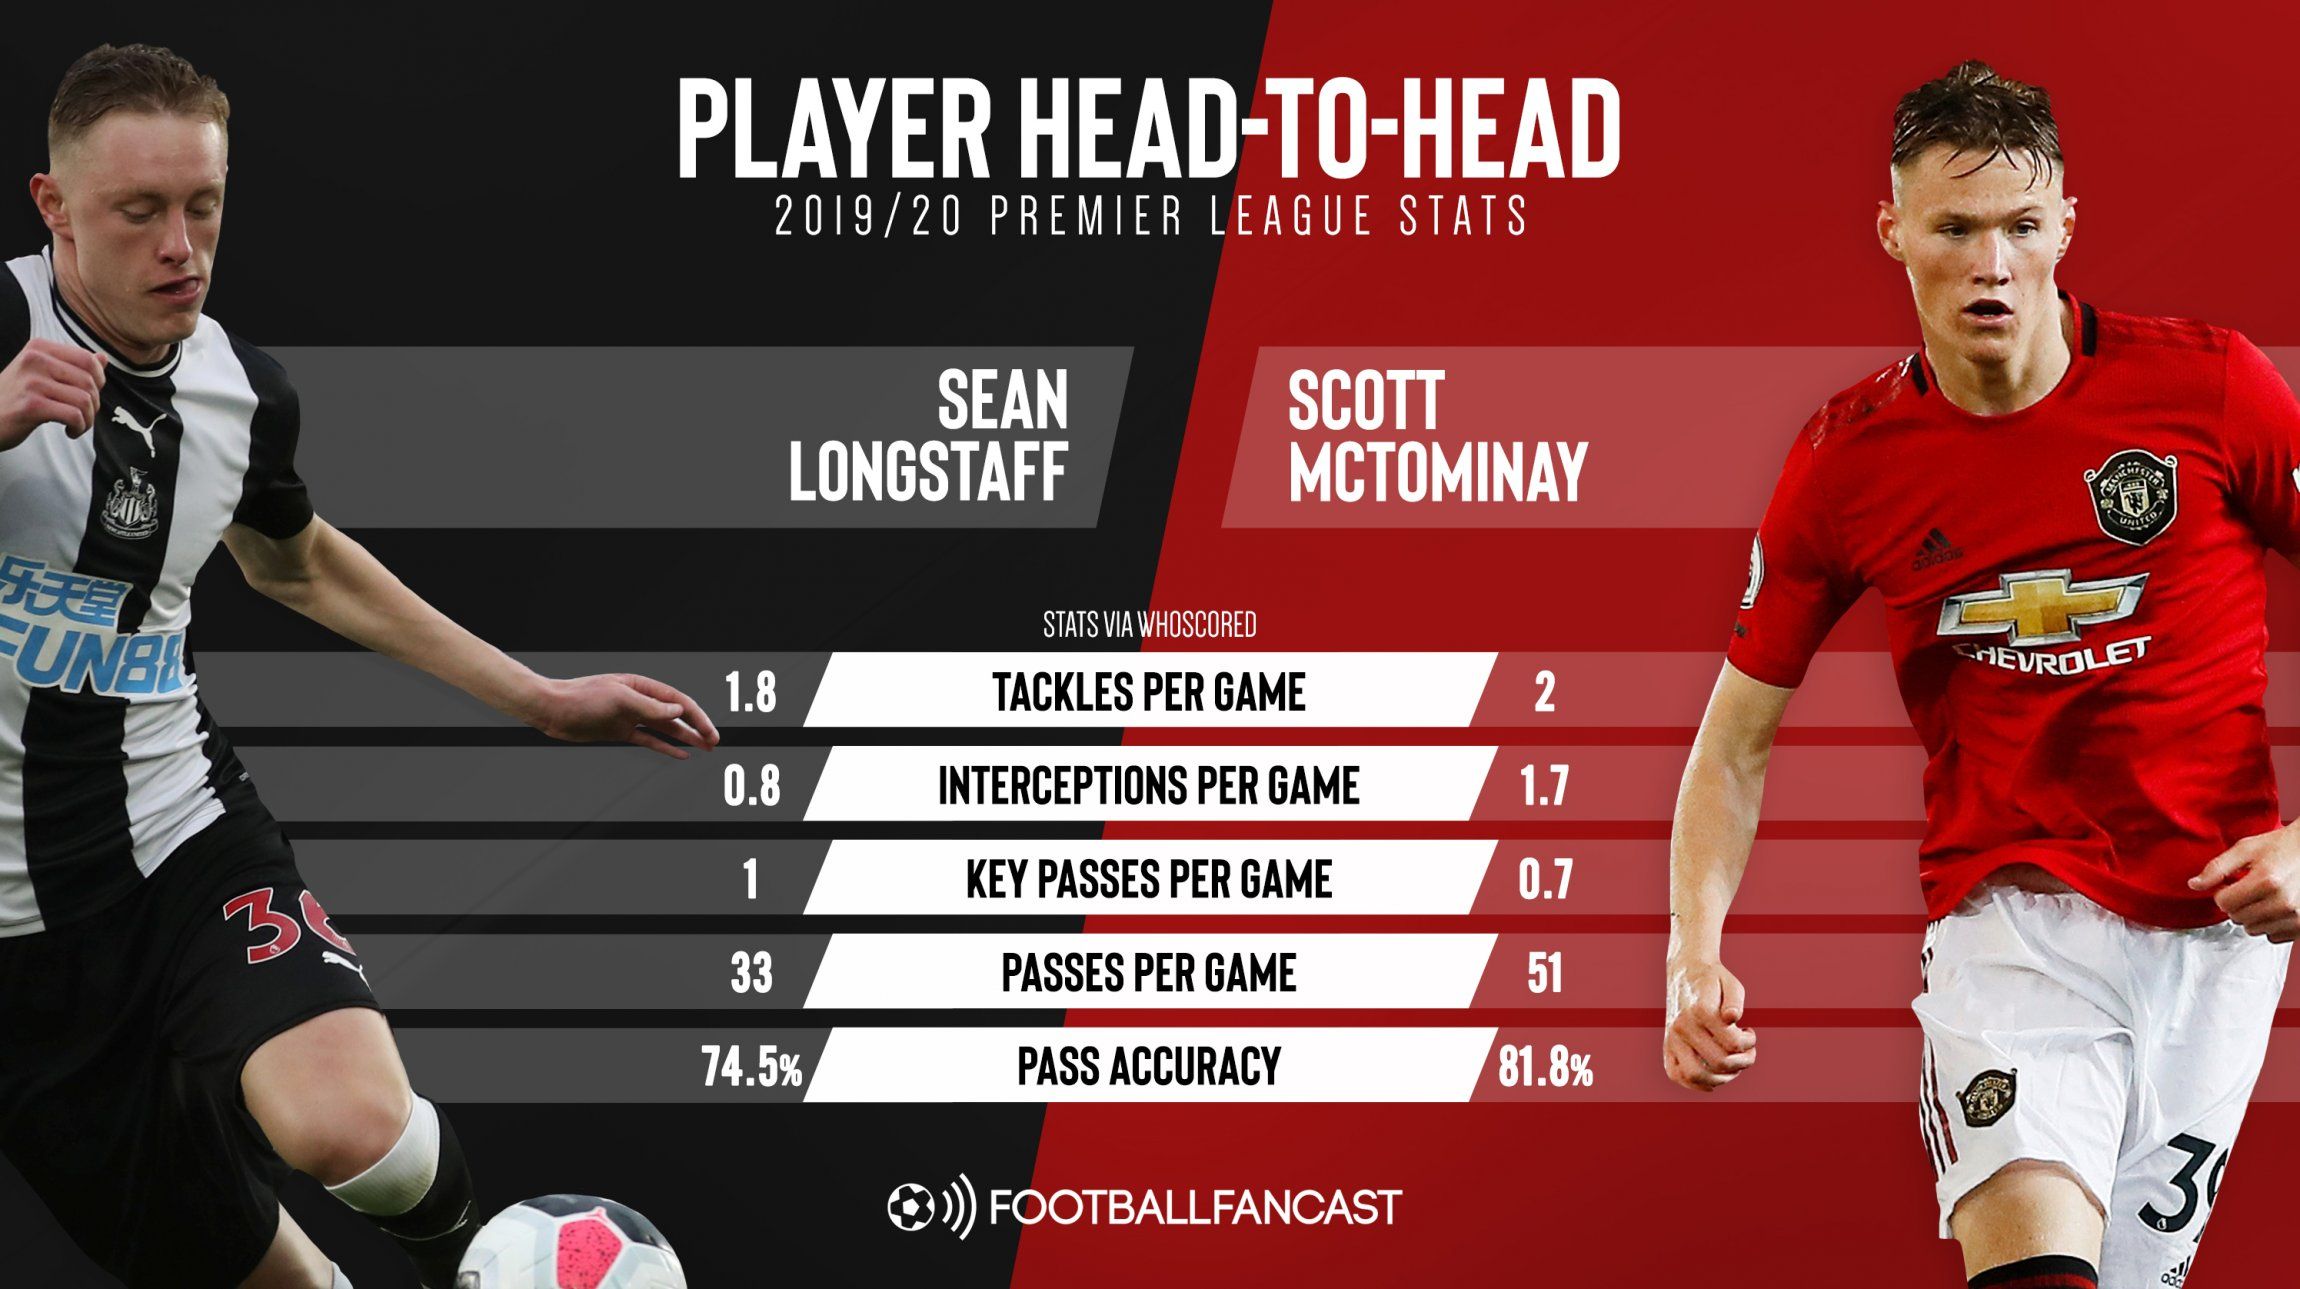 Sean Longstaff vs Scott McTominay